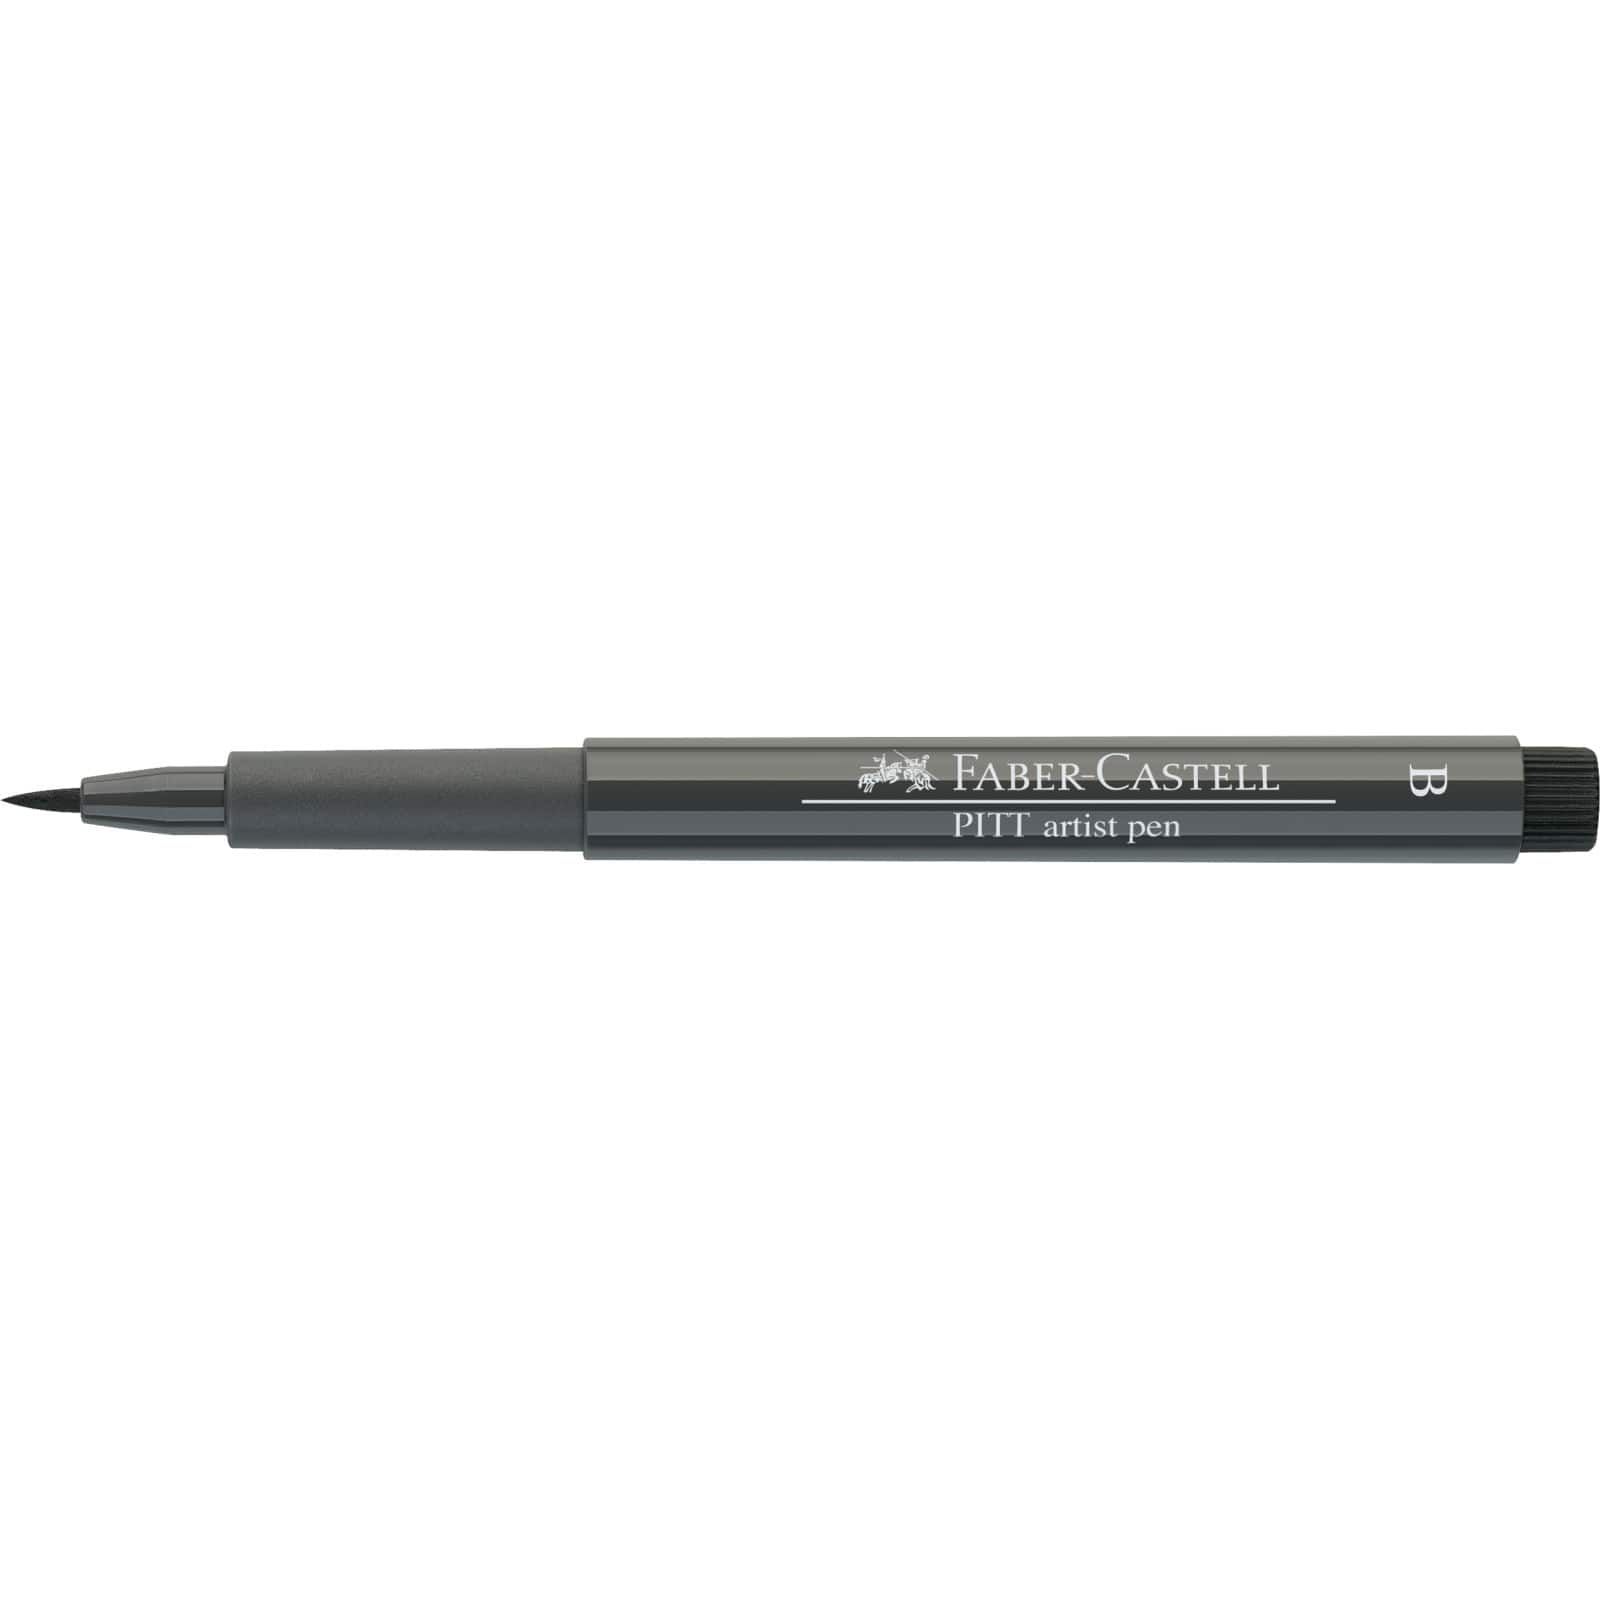 Faber Castell Pitt Pens - The Art Store/Commercial Art Supply